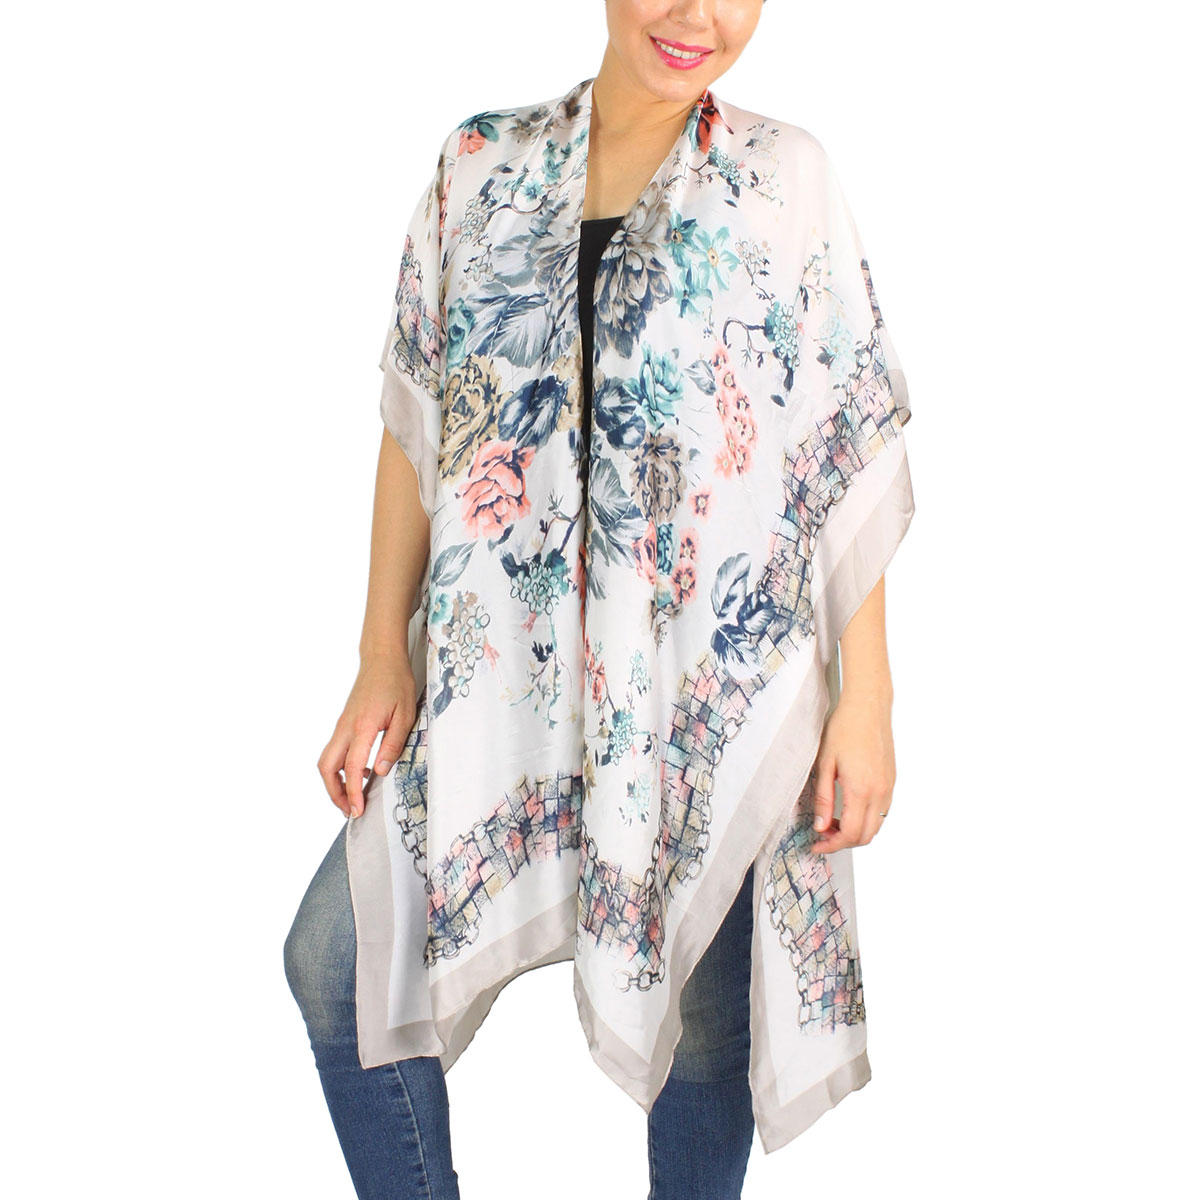 Light Satin Kimono - 4237/9287 9287 - Olive Border<br>
Flower Print Kimono - 